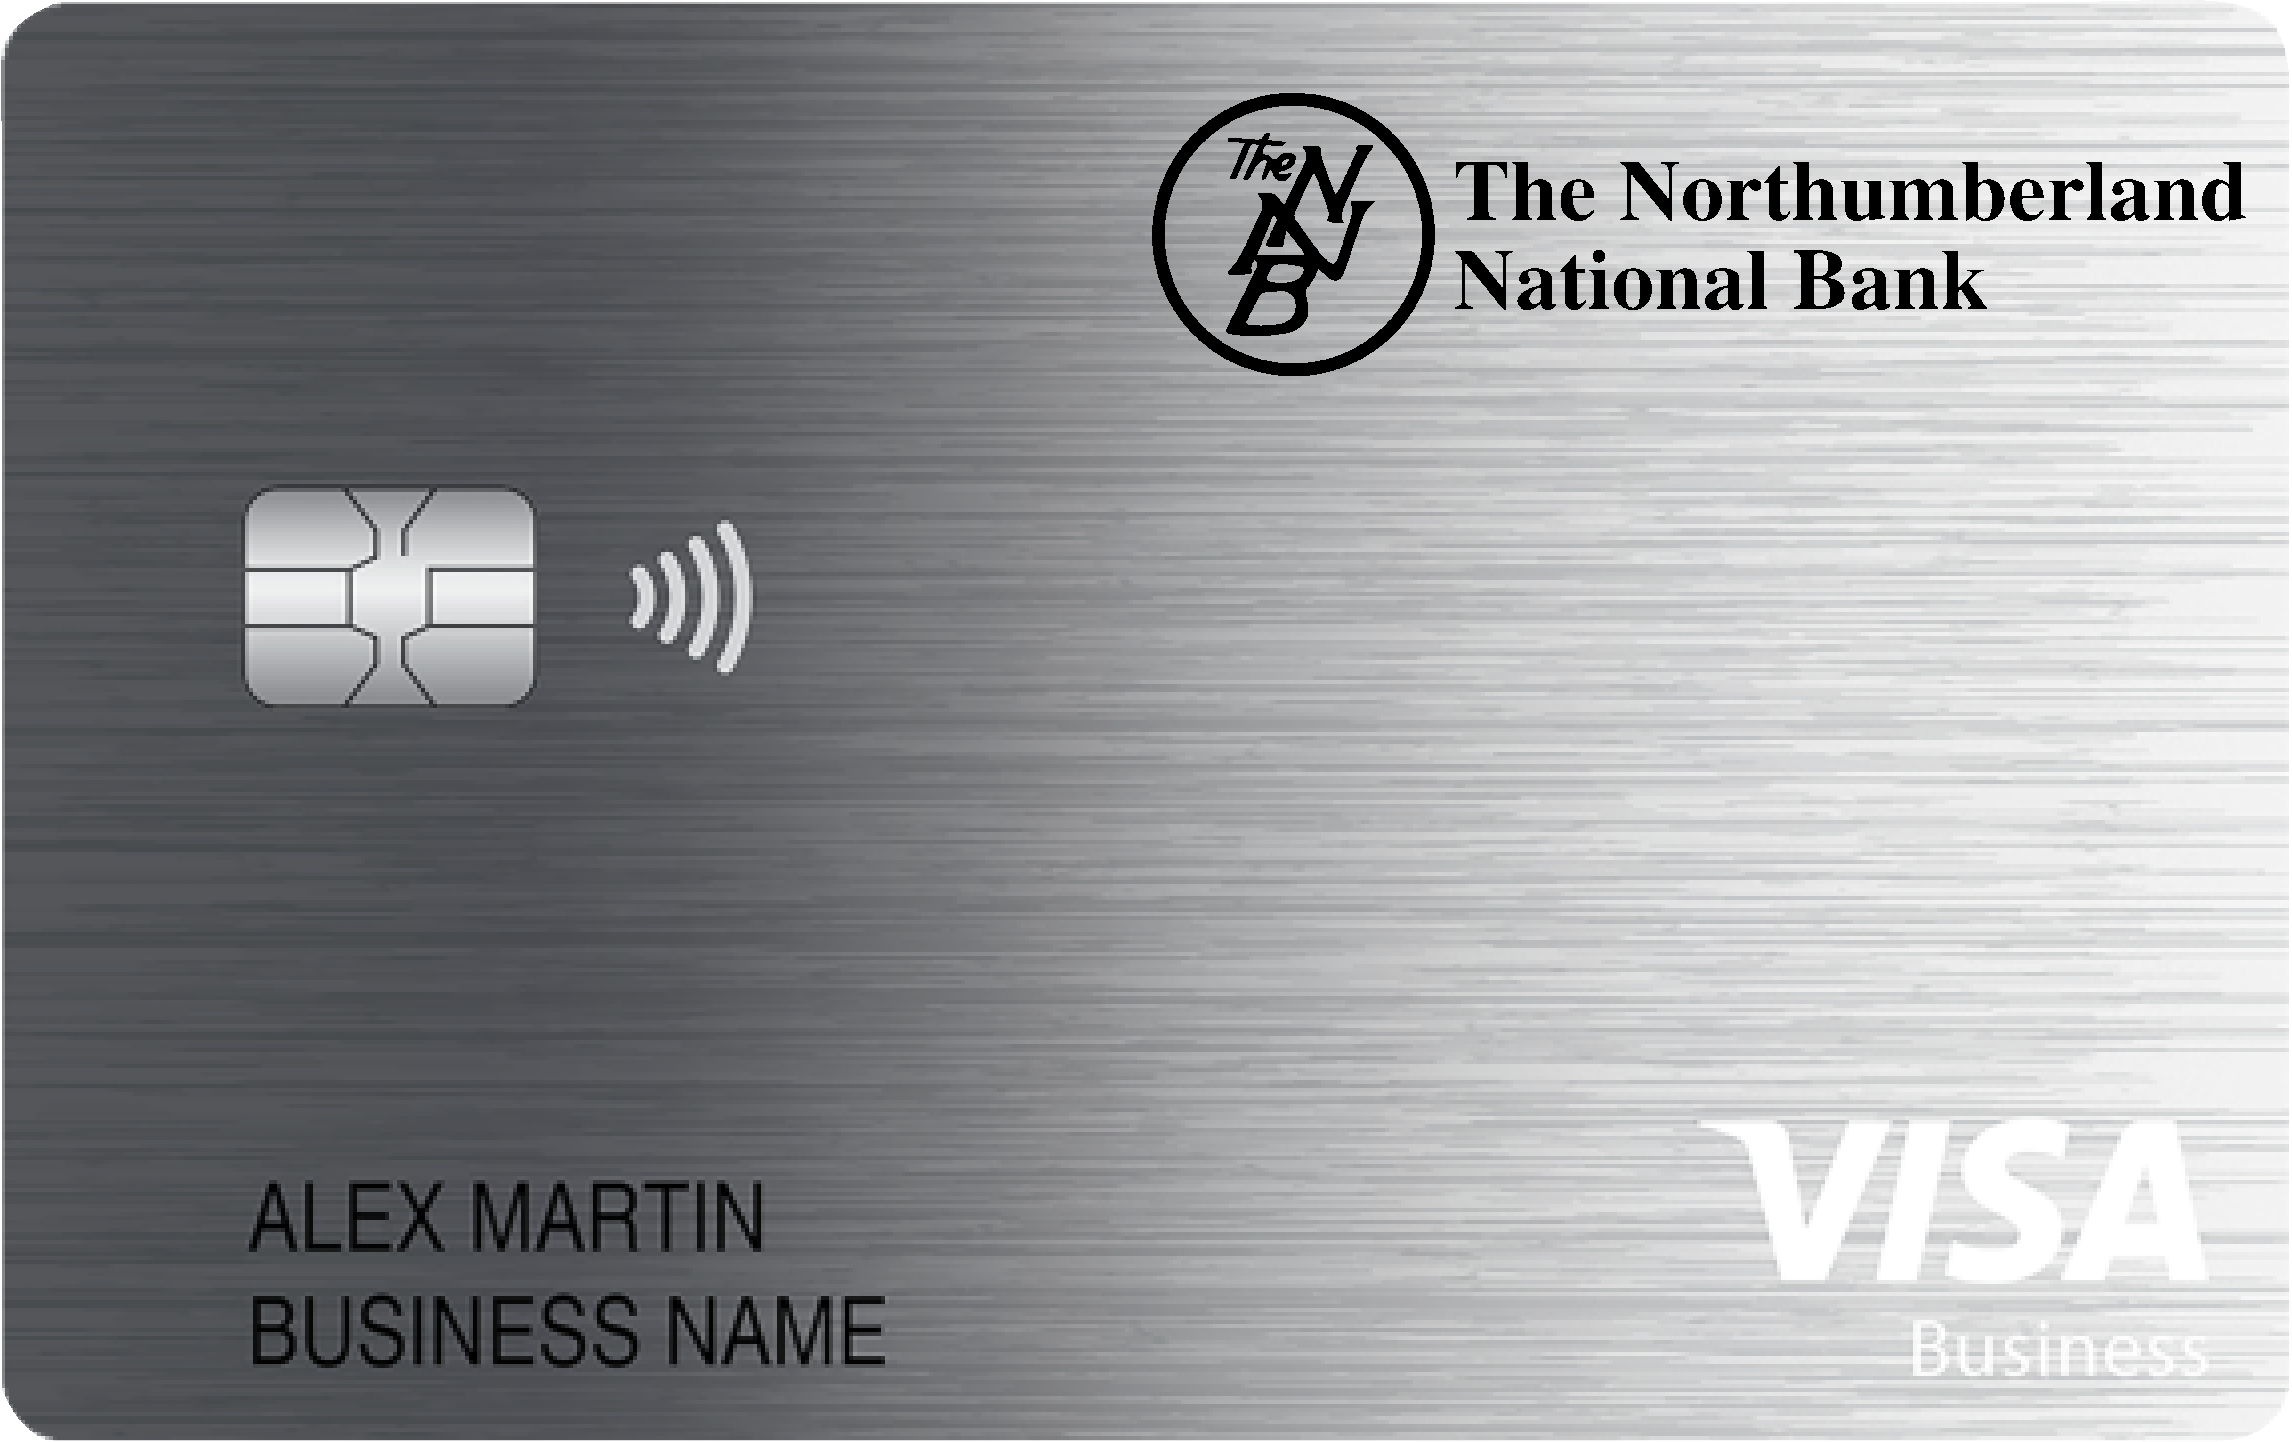 The Northumberland National Bank